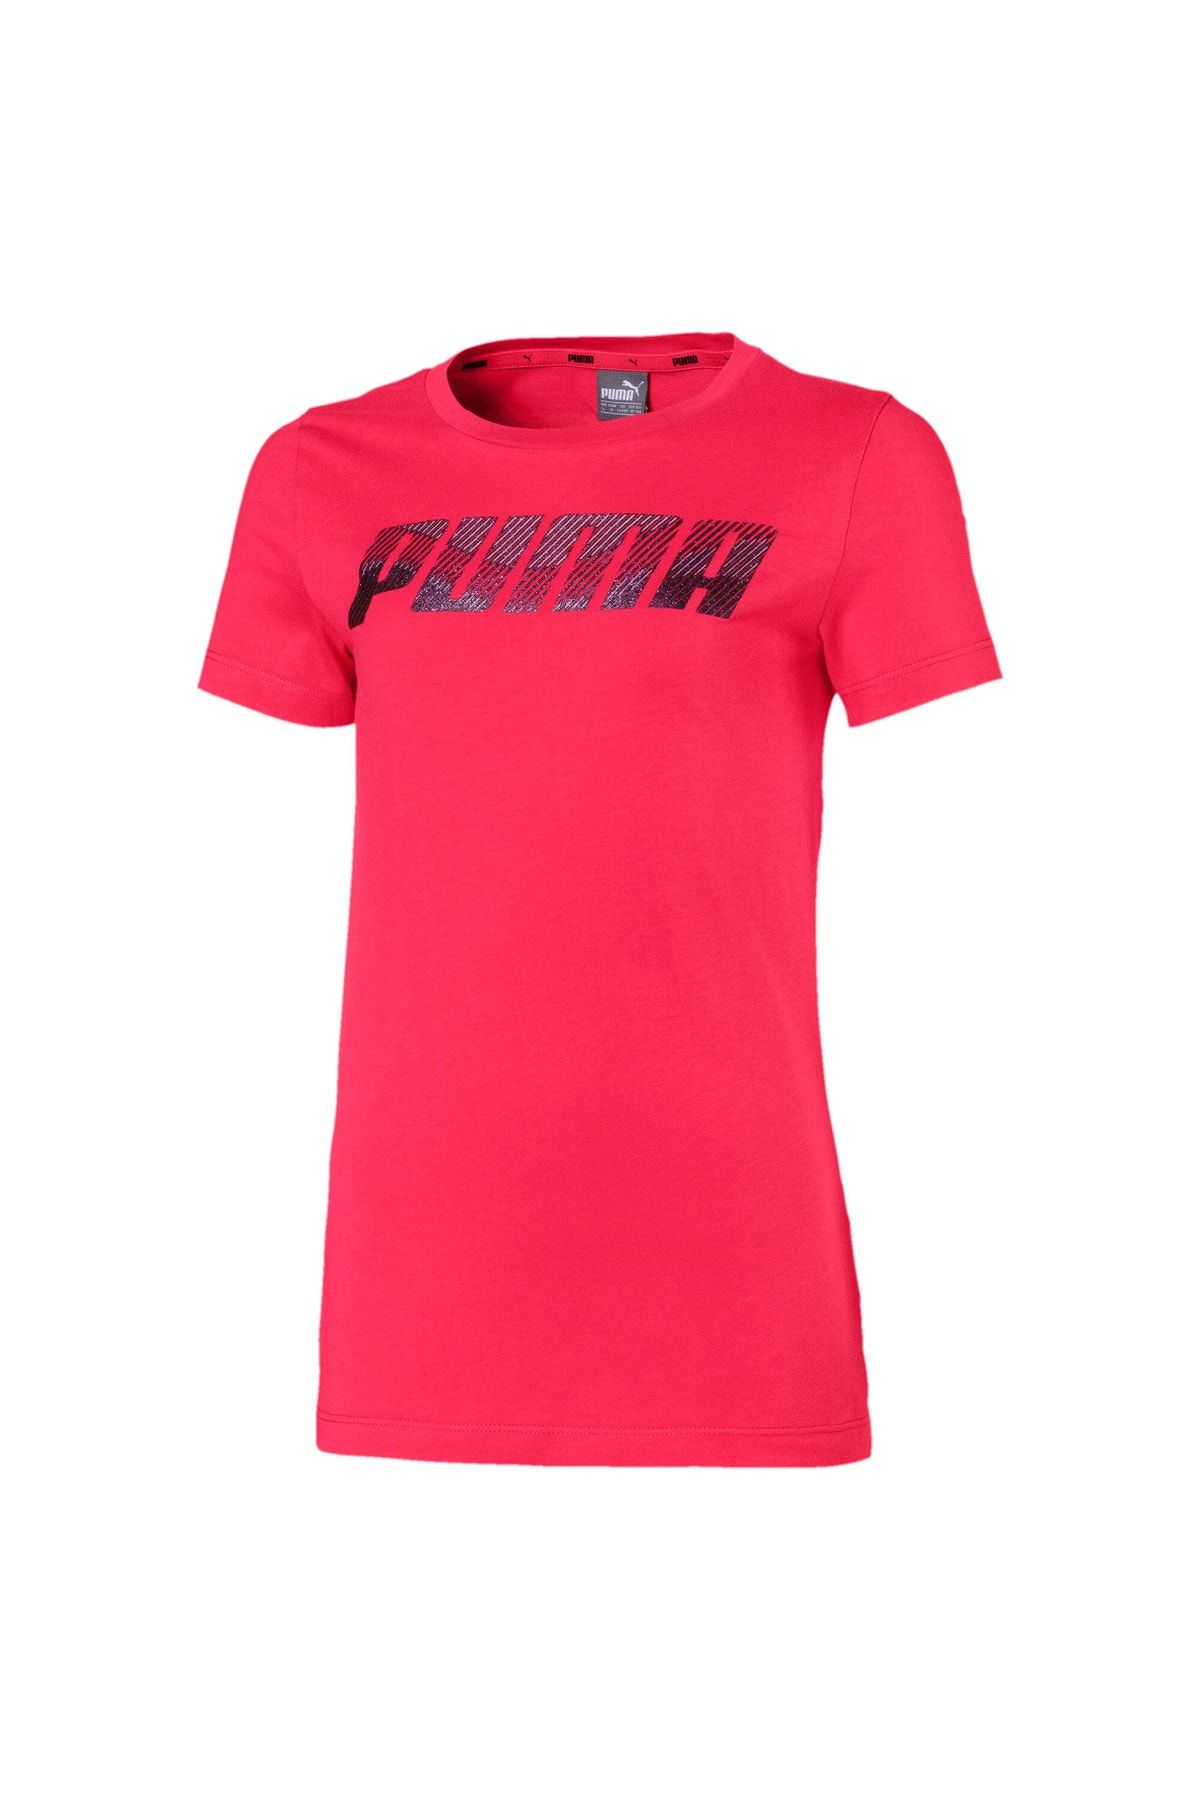 Puma Alpha Logo Kısa Kollu Kız Çocuk T-shirt